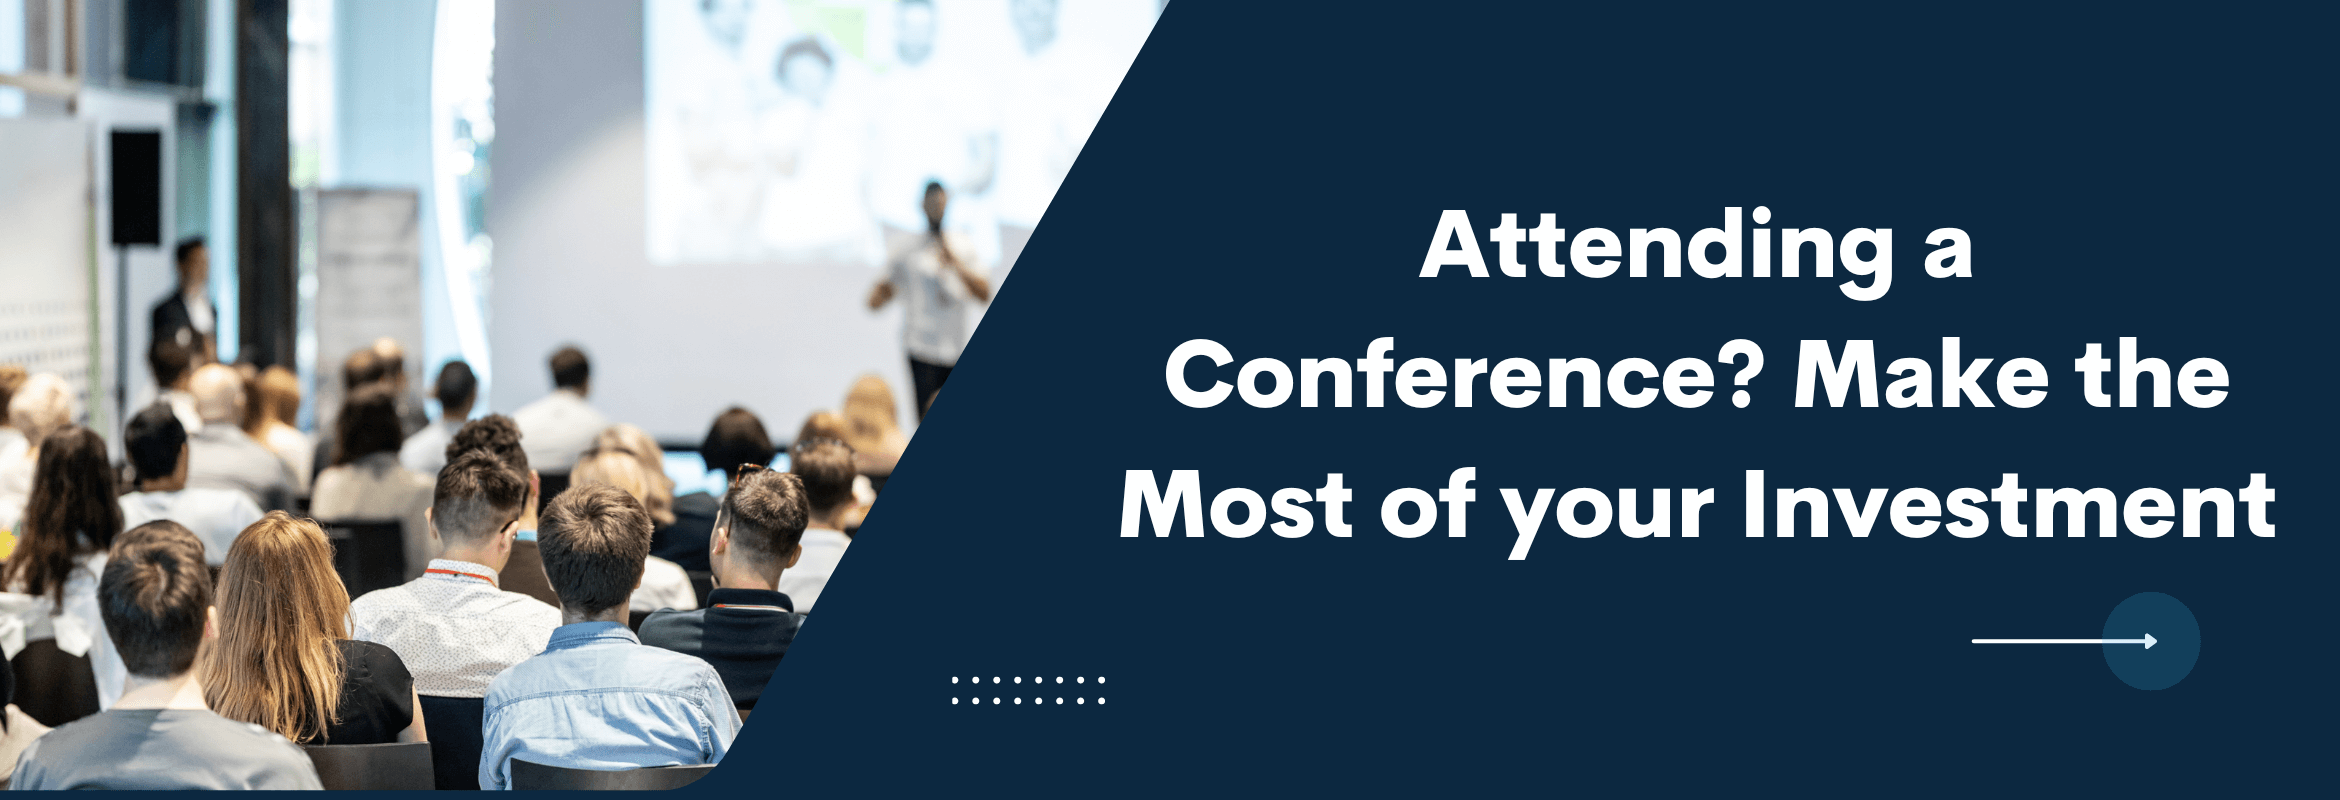 Conference Checklist